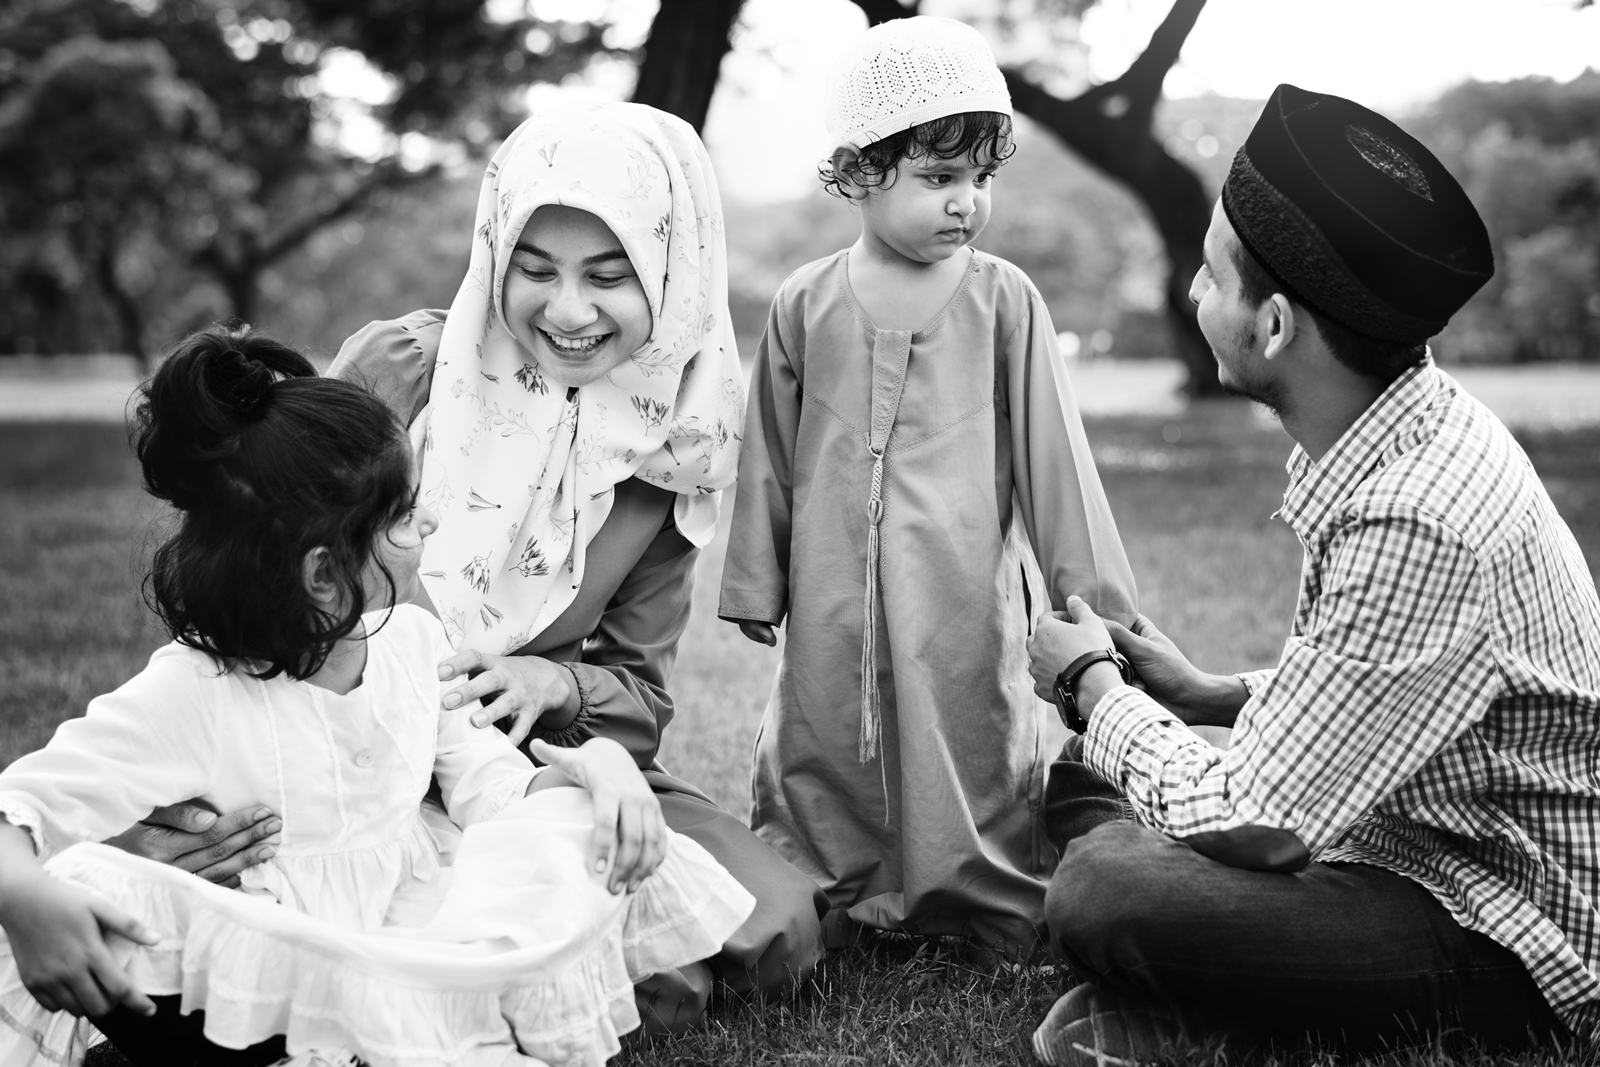 Mendidik anak dalam islam (islamic parenting)